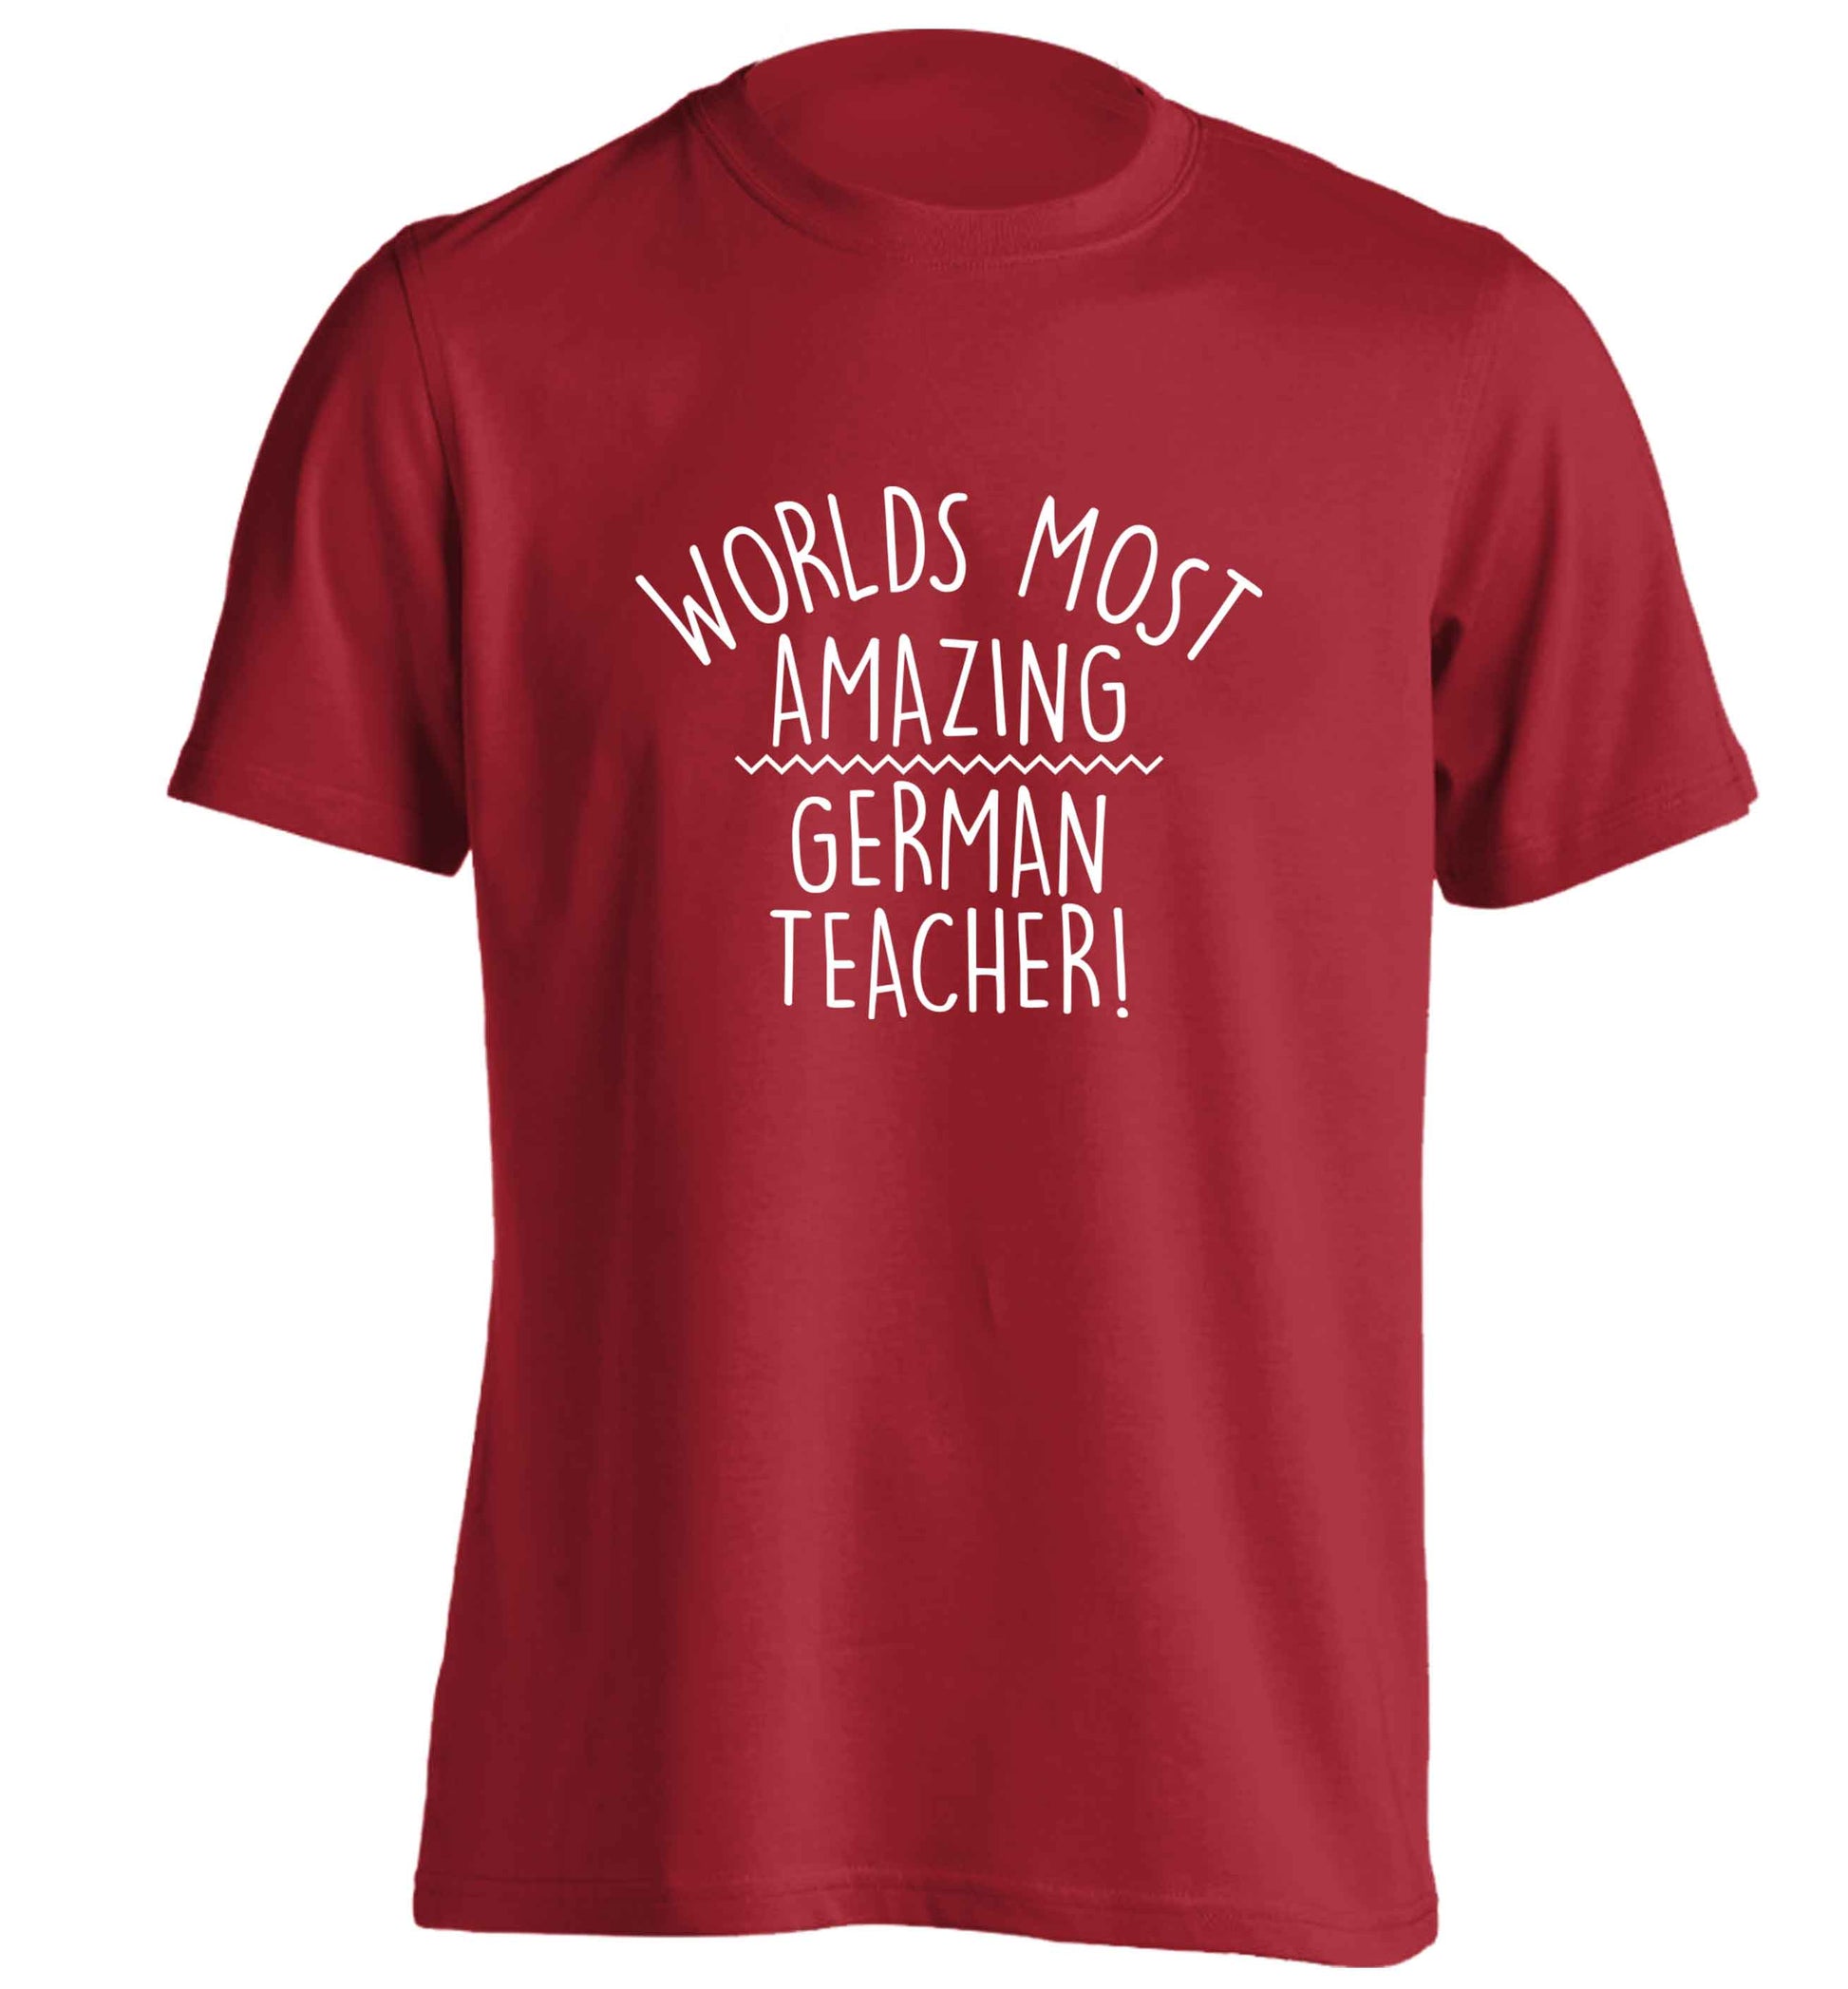 Worlds most amazing German teacher adults unisex red Tshirt 2XL